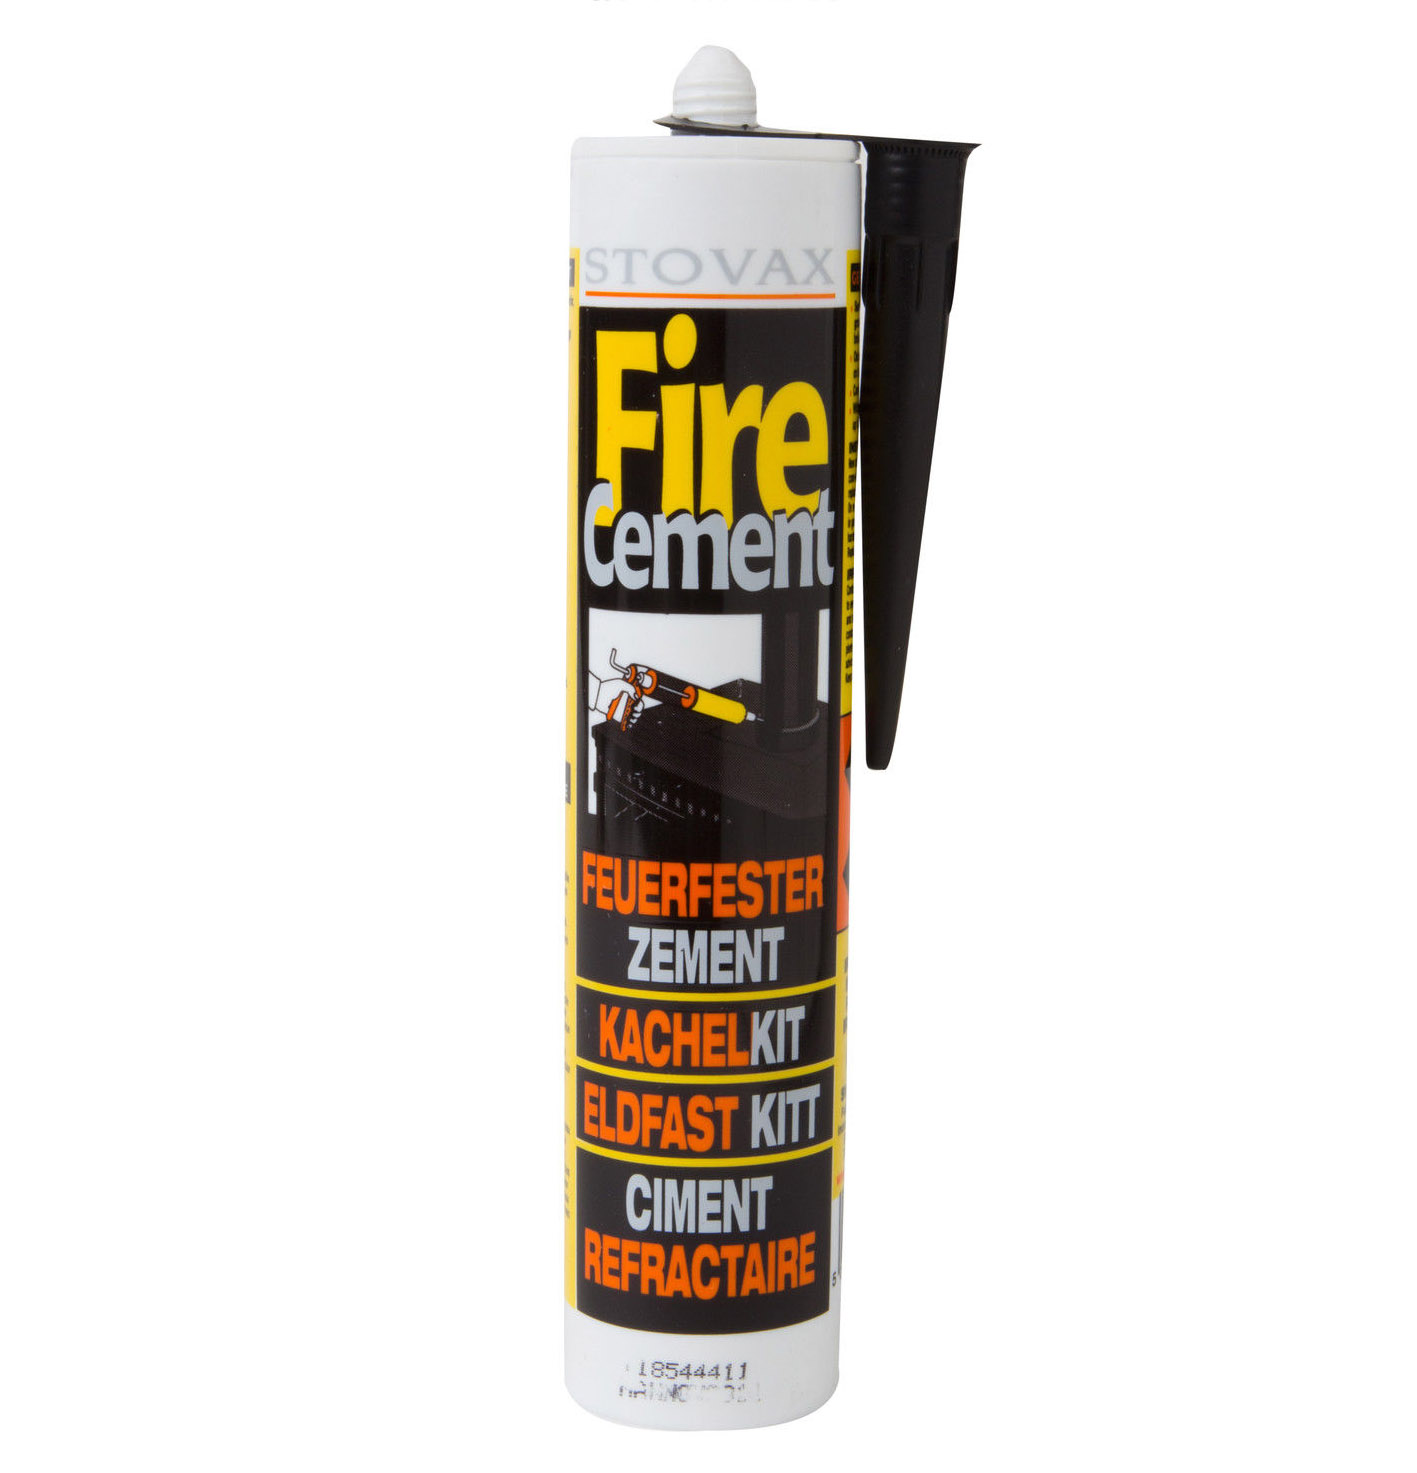 Stovax Fire Black Cement Cartridge - Debrett Fires